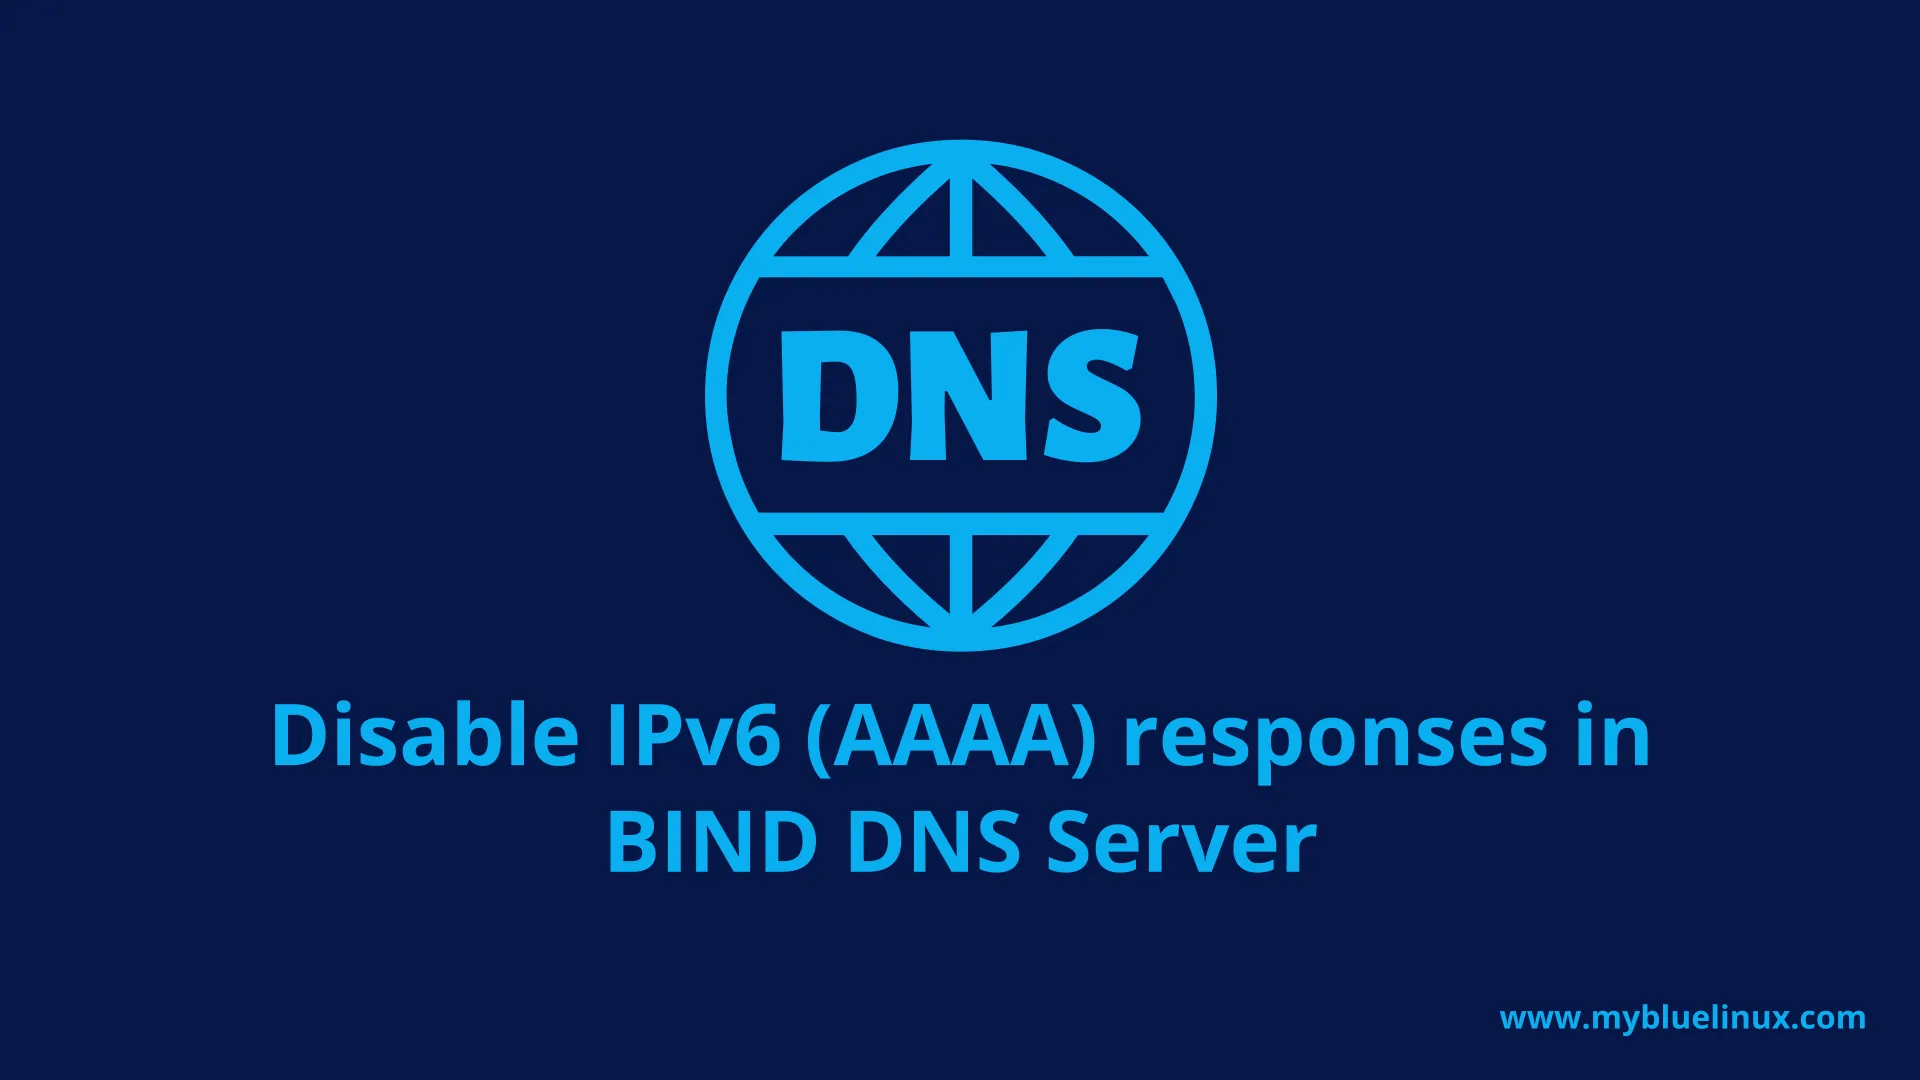 BIND: Disabling IPv6 responses in bind dns server